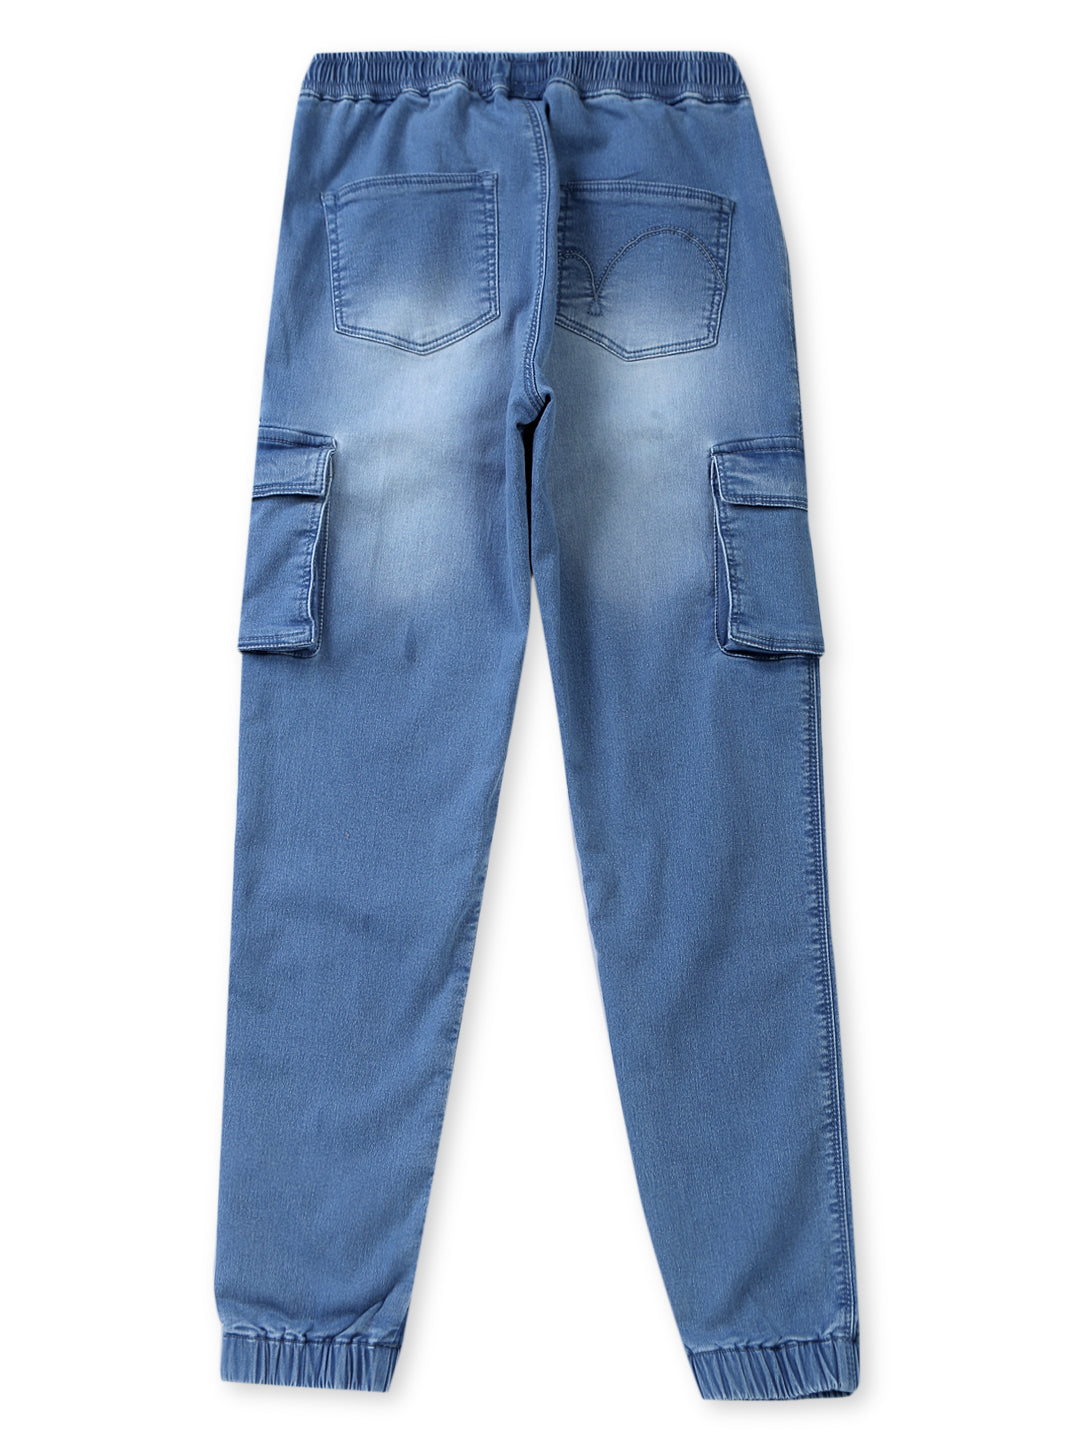 Girls Blue Cotton Denim Solid Jeans